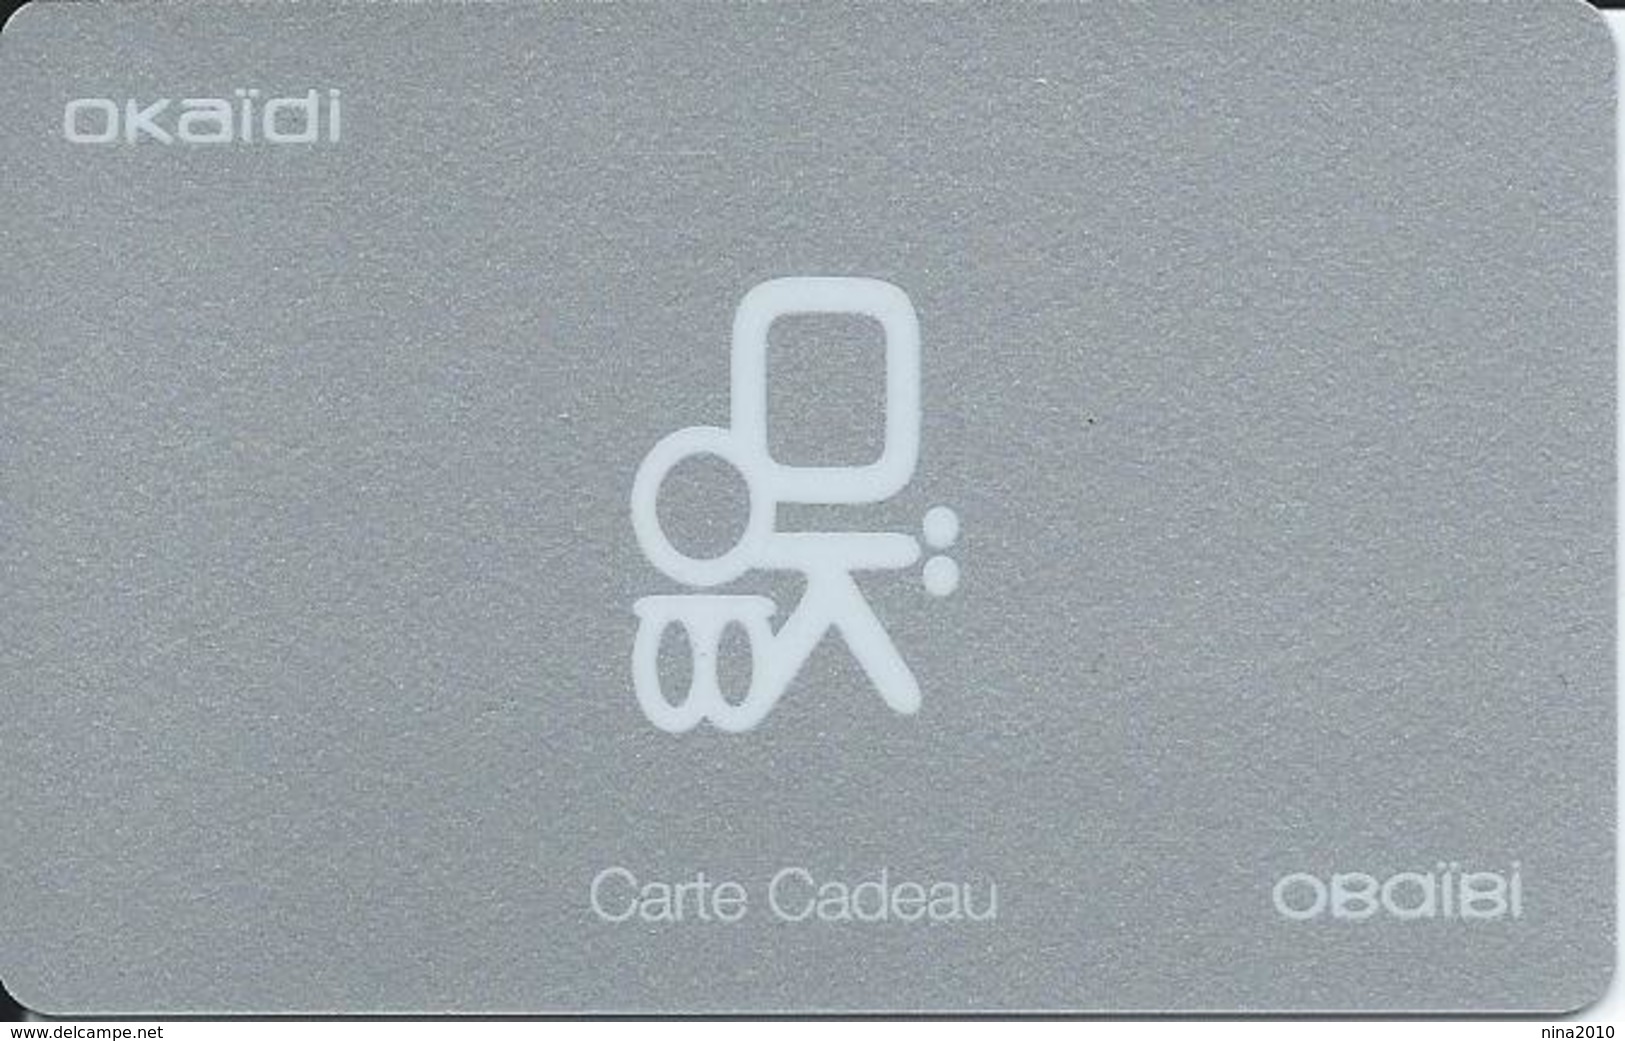 Gift Cards - Carte cadeau - Okaidi / Obaidi - GIFT CARD /GESCHENKKARTE